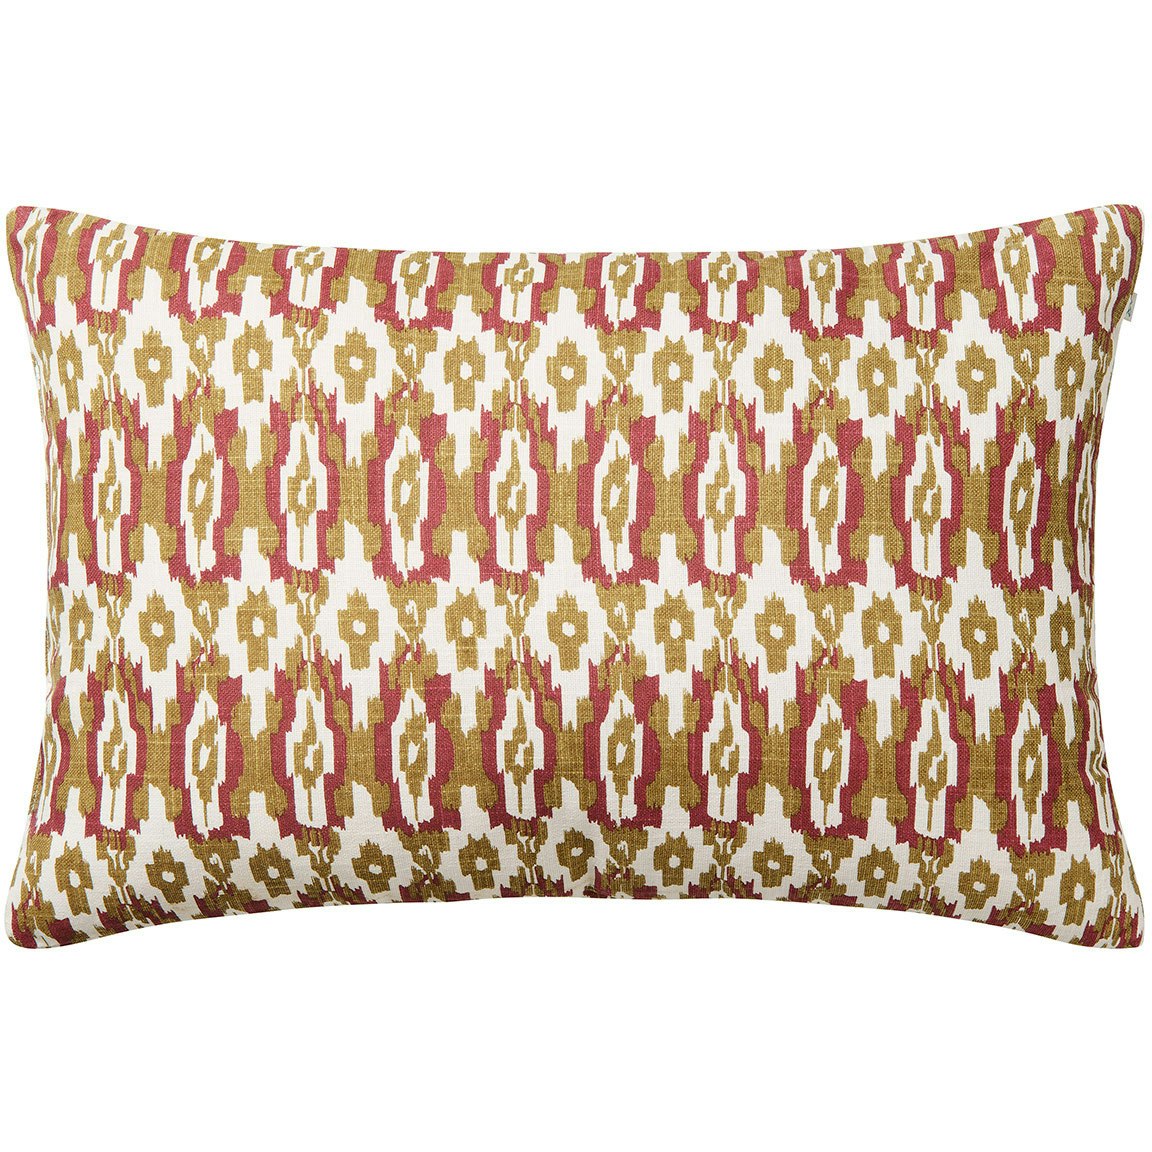 Ikat Delhi Cushion Outdoor 40x60 cm, Beige / Mineral Red